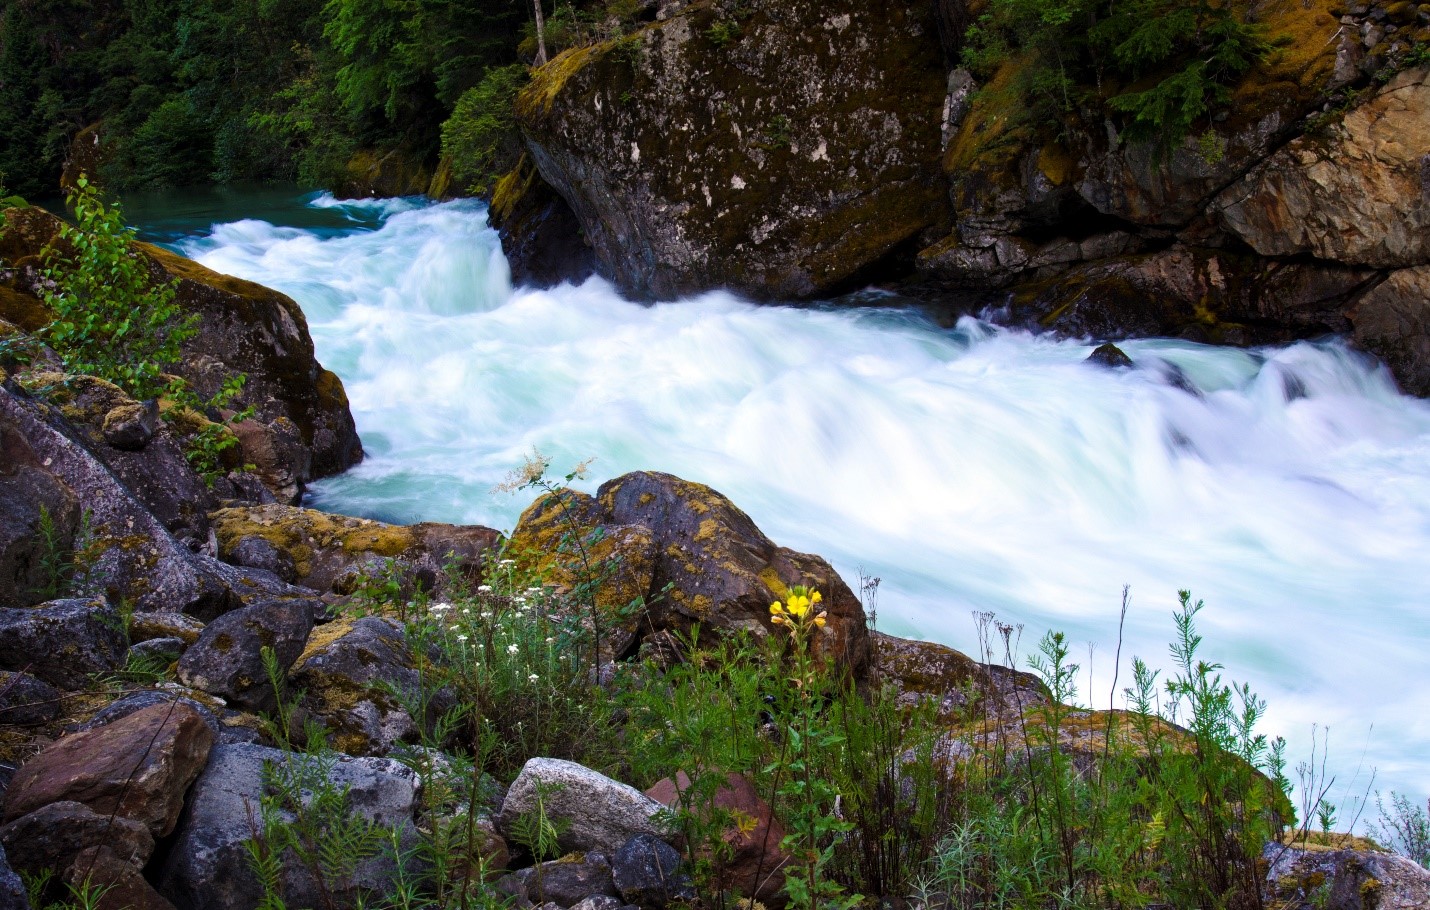 Skagit River flowing through rocks